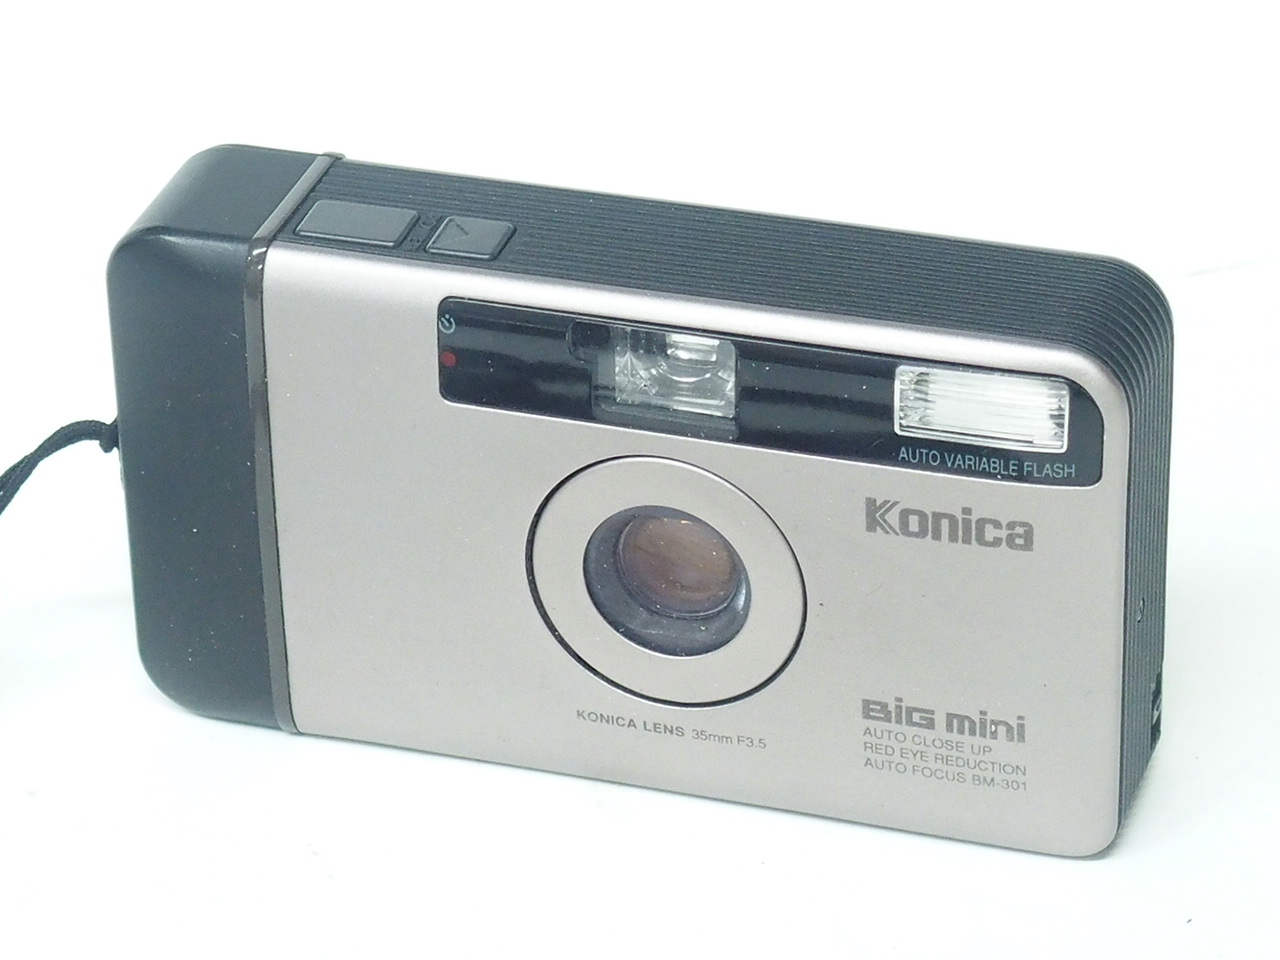 35mmF35コニカ BIG mini BM-301S フィルムカメラ 完動品　電池2本付